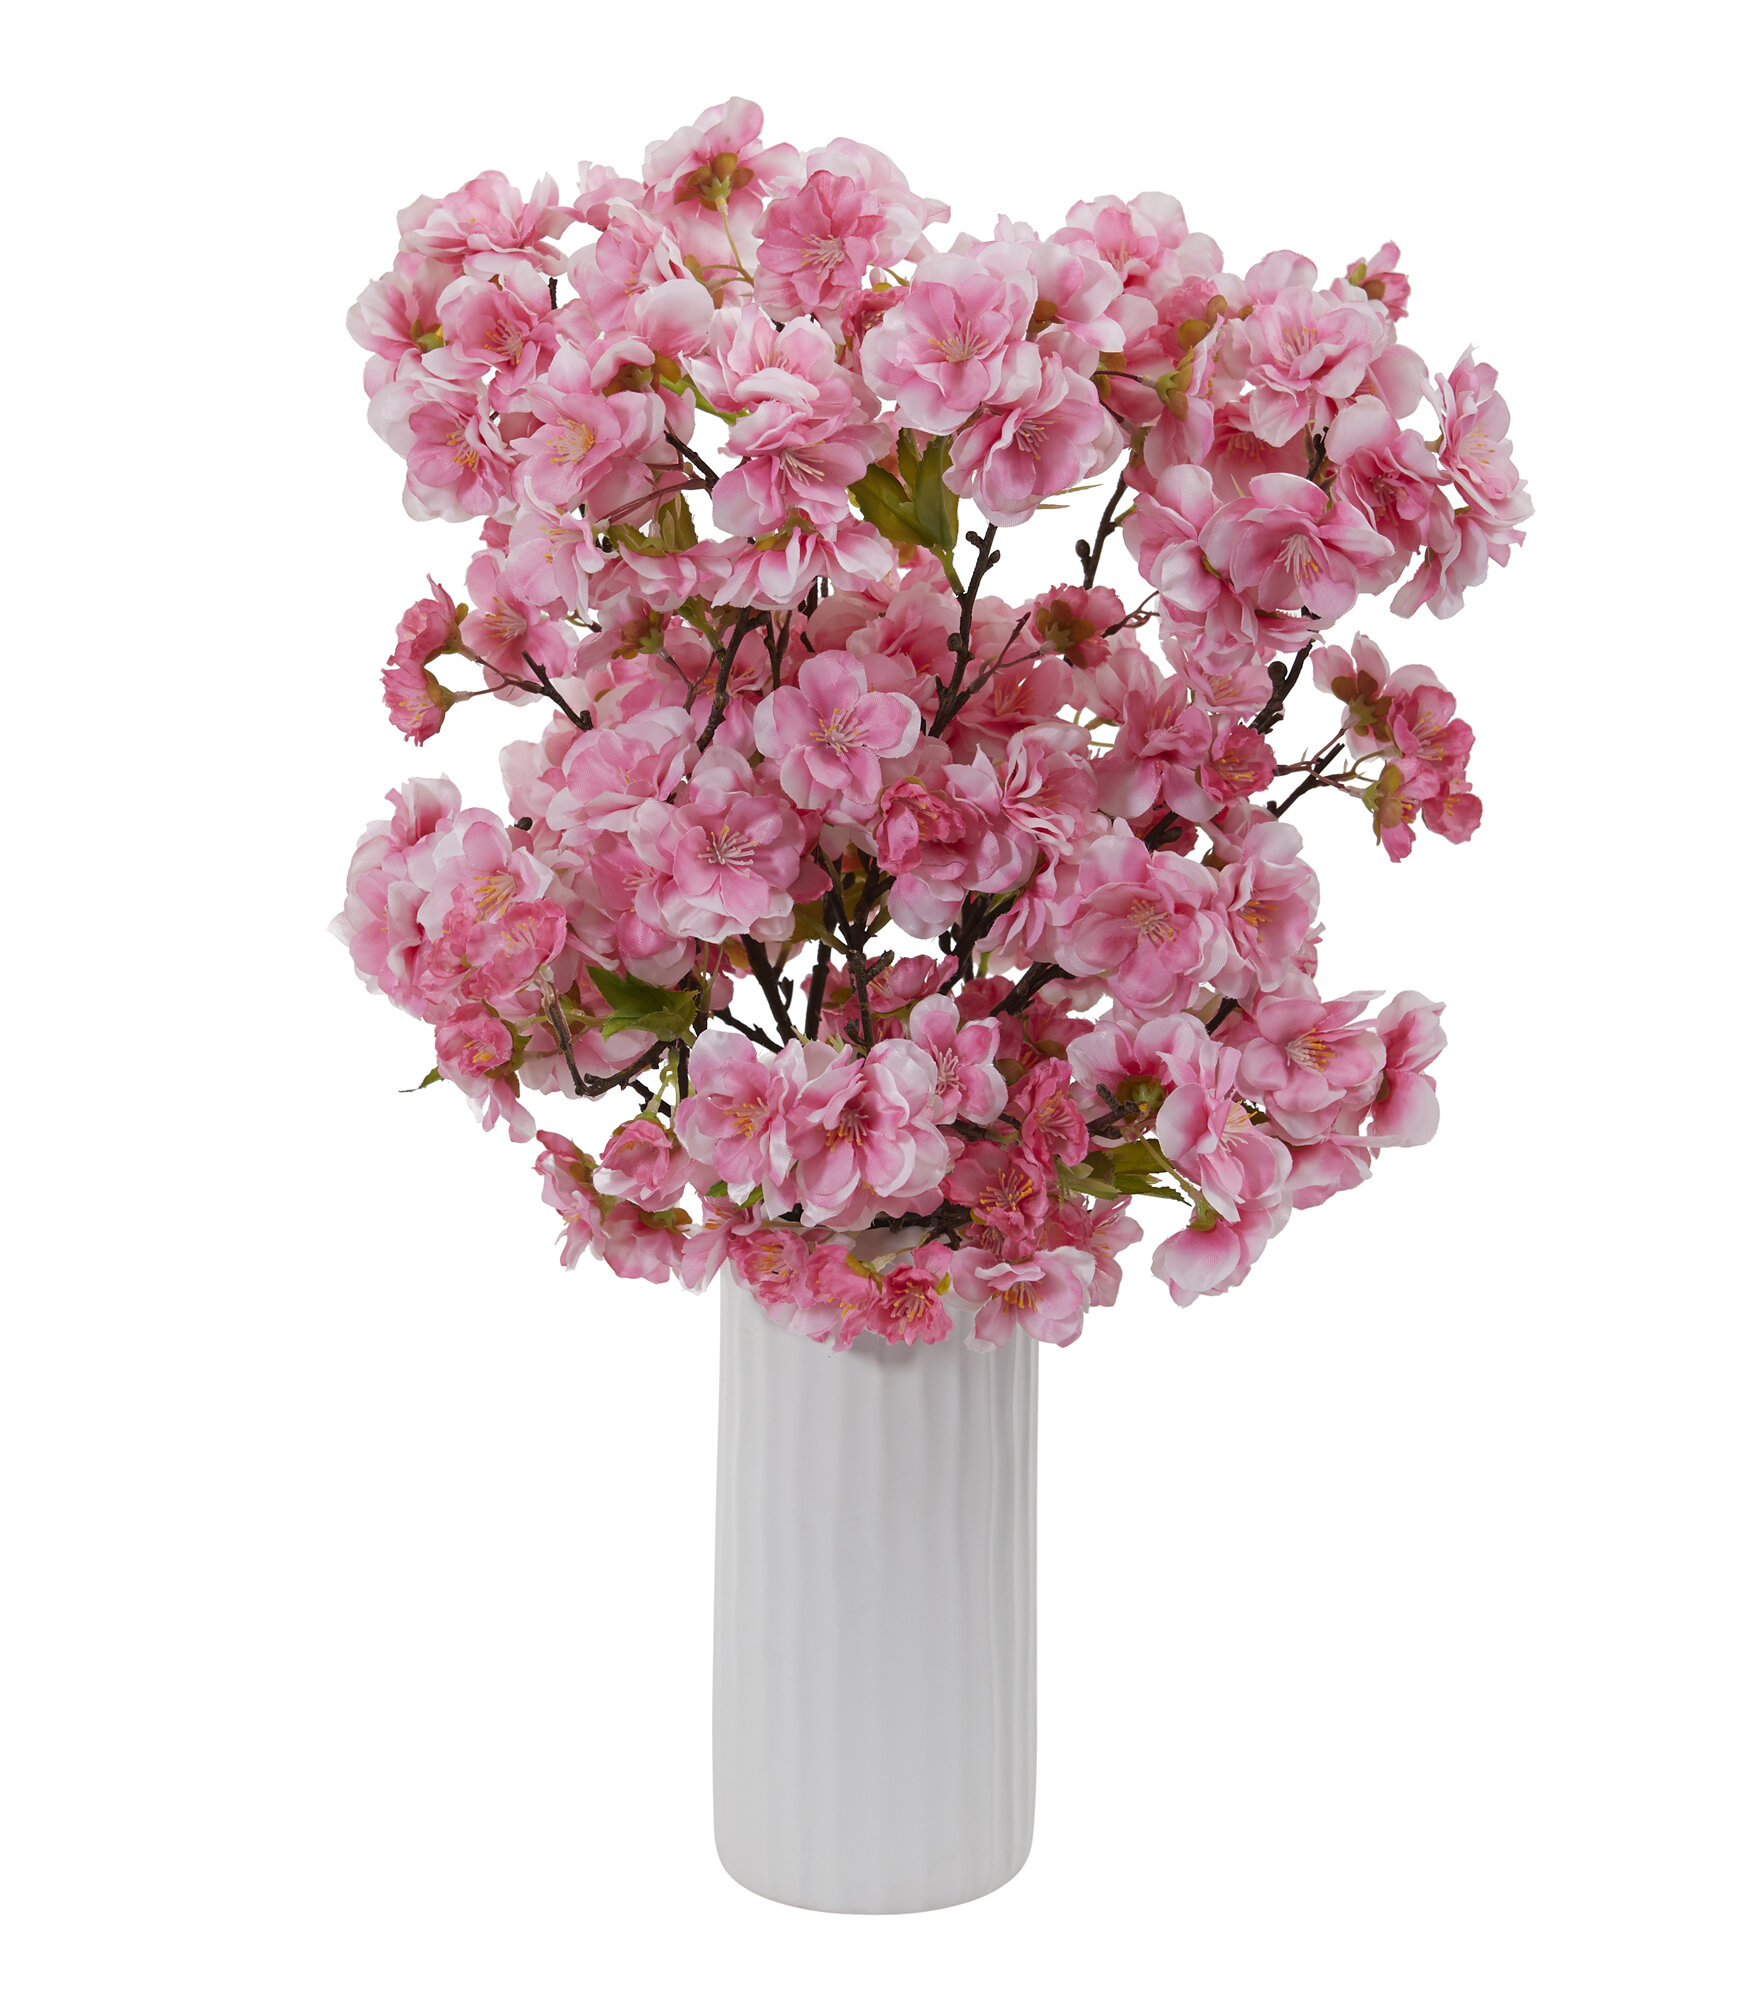 HEMOTON Artificial Plum Blossom in Vase Plastic Cherry Flowers Sushi Table Centerpieces for Kitchen Garden Indoor Decor Pink 